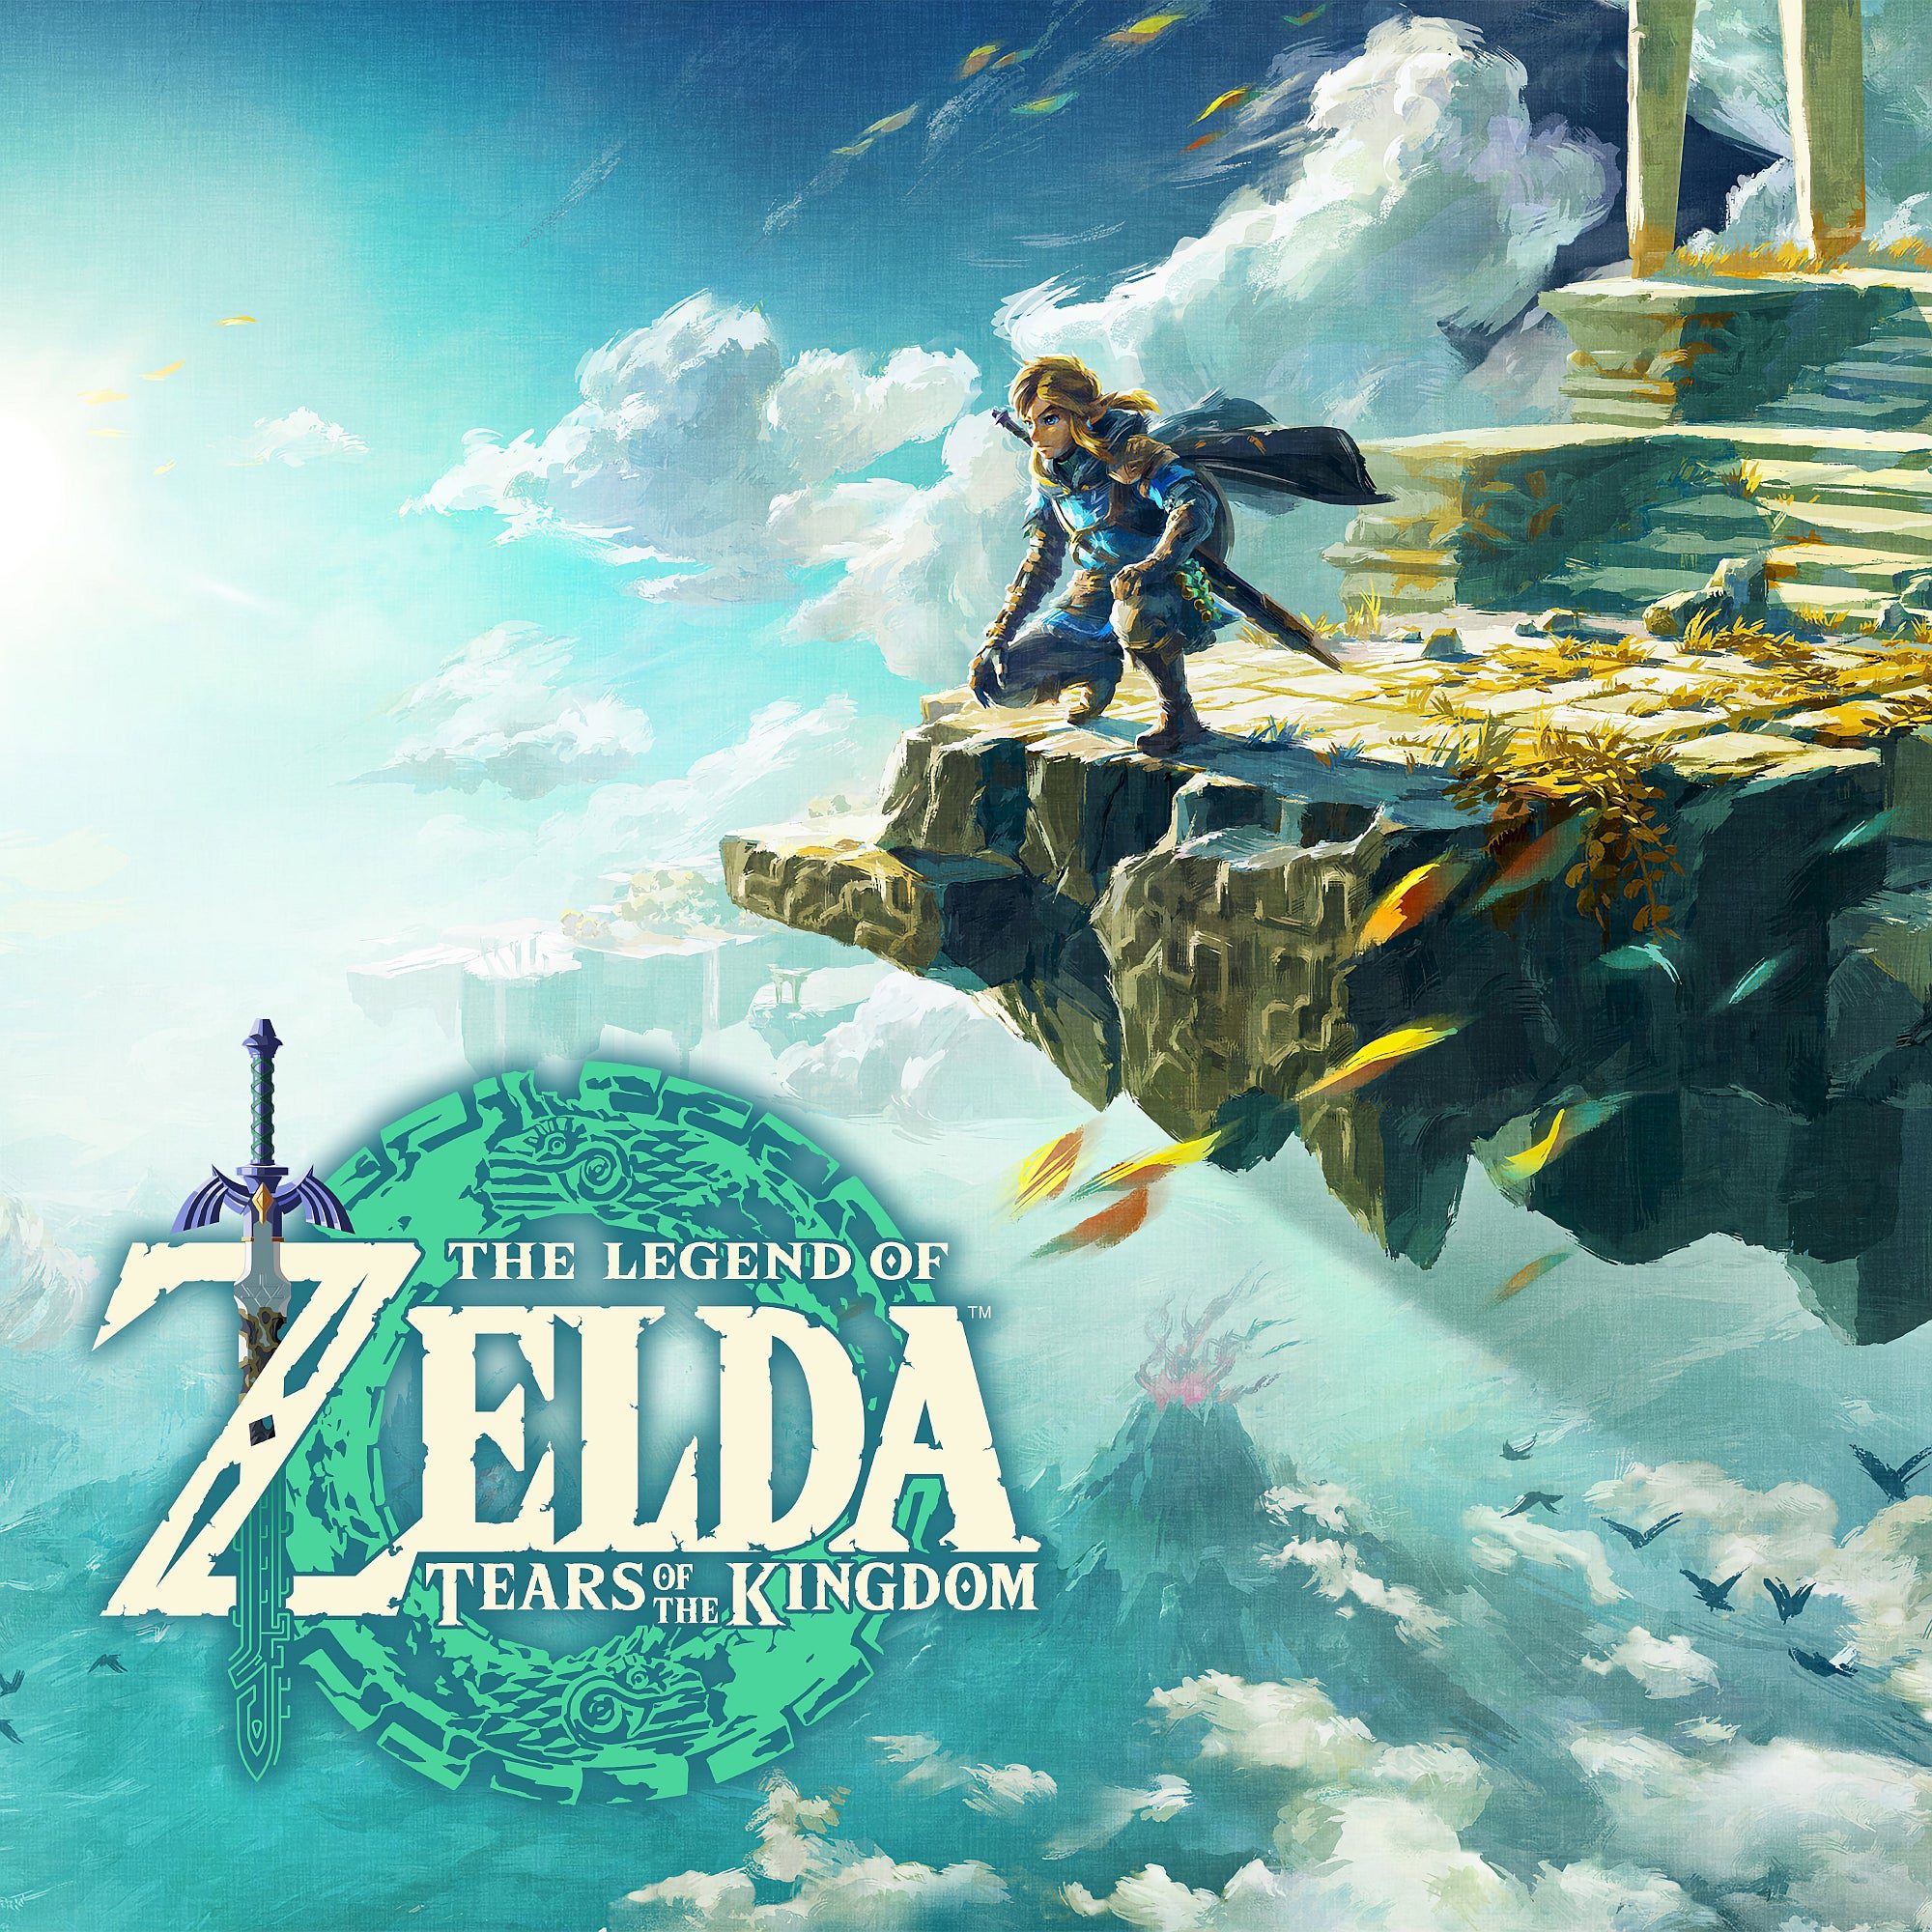 1
‘The Legend of Zelda: Tears of the Kingdom’